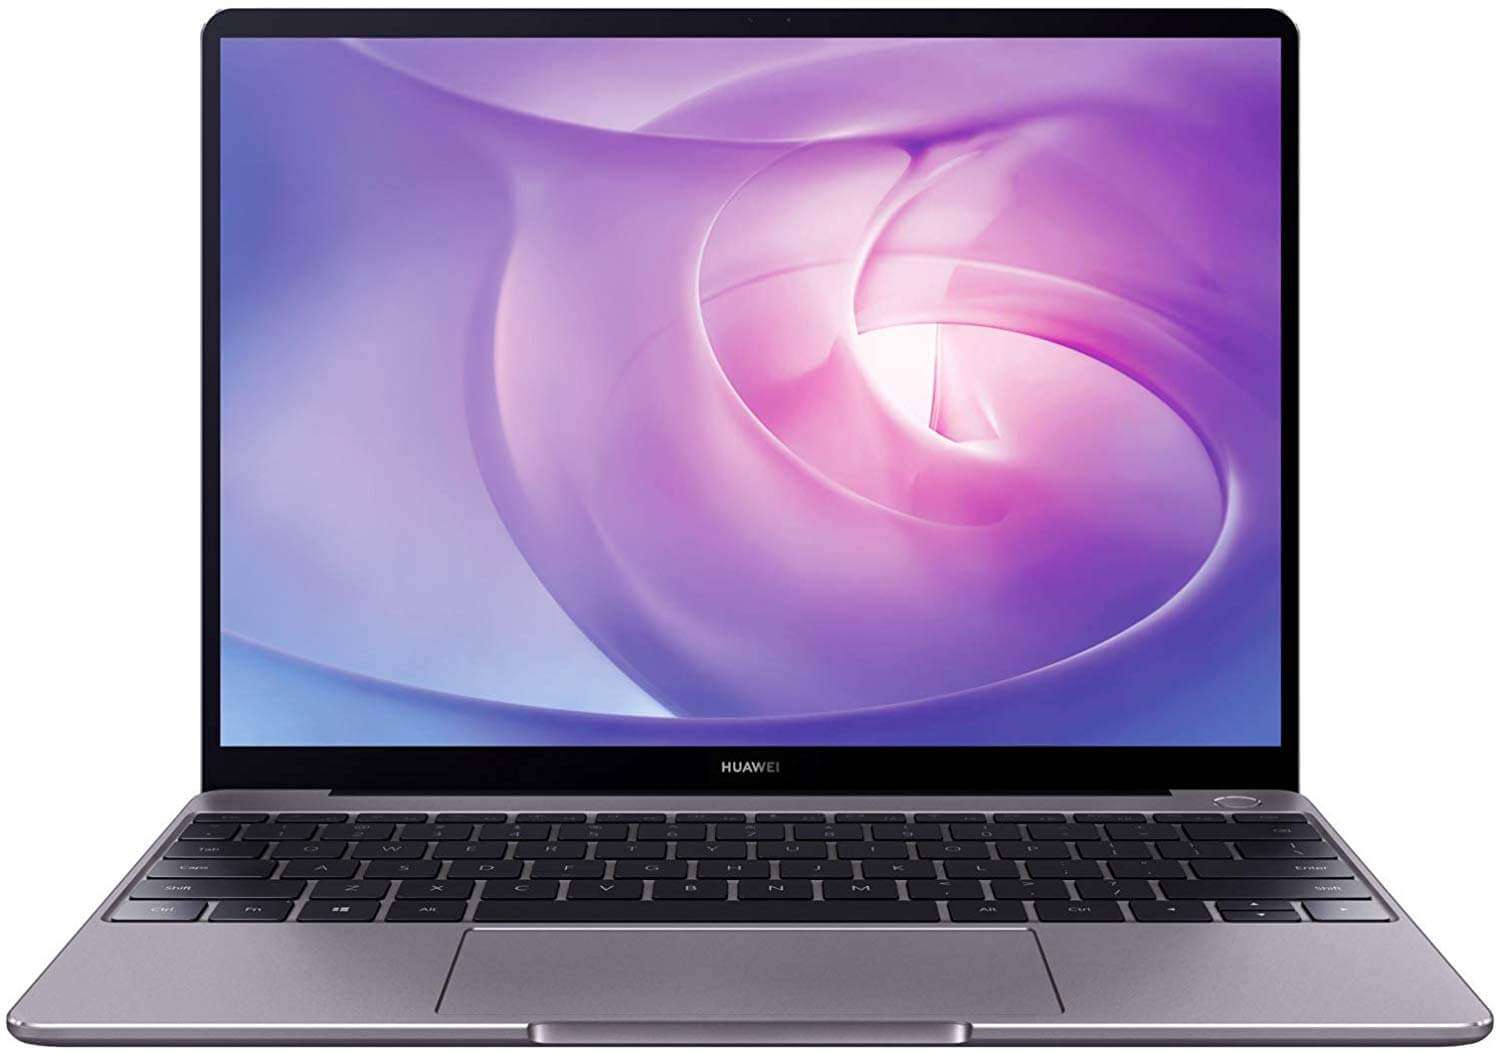 HUAWEI MateBook 13 Laptop With 13-Inch Display, Core i7 Processor/8GB RAM/512GB SSD/Intel UHD Graphics 620 Space Grey